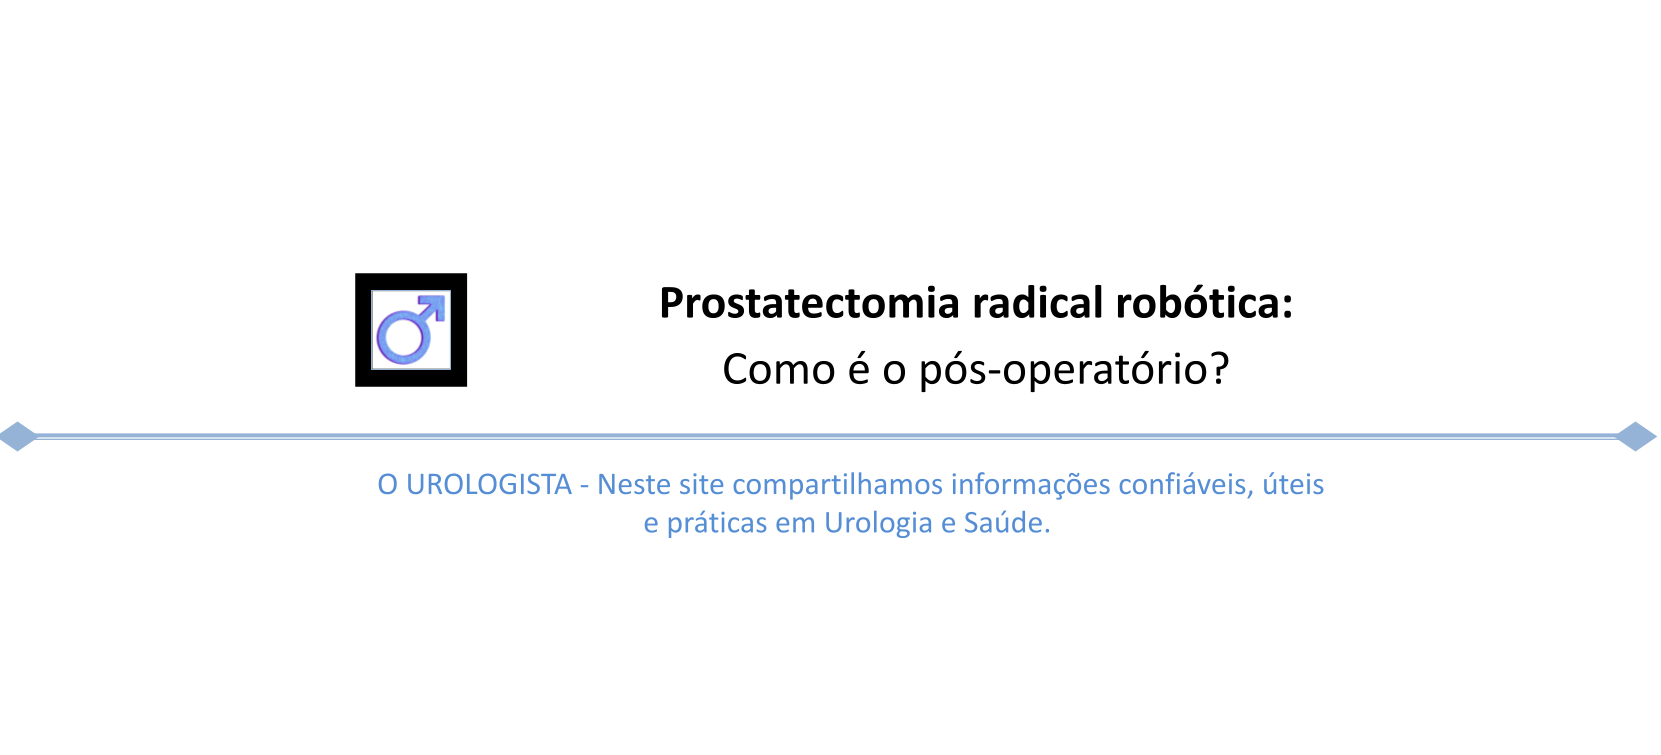 Capa-prostatectomia-radical-robotica-Giovanni-marchini